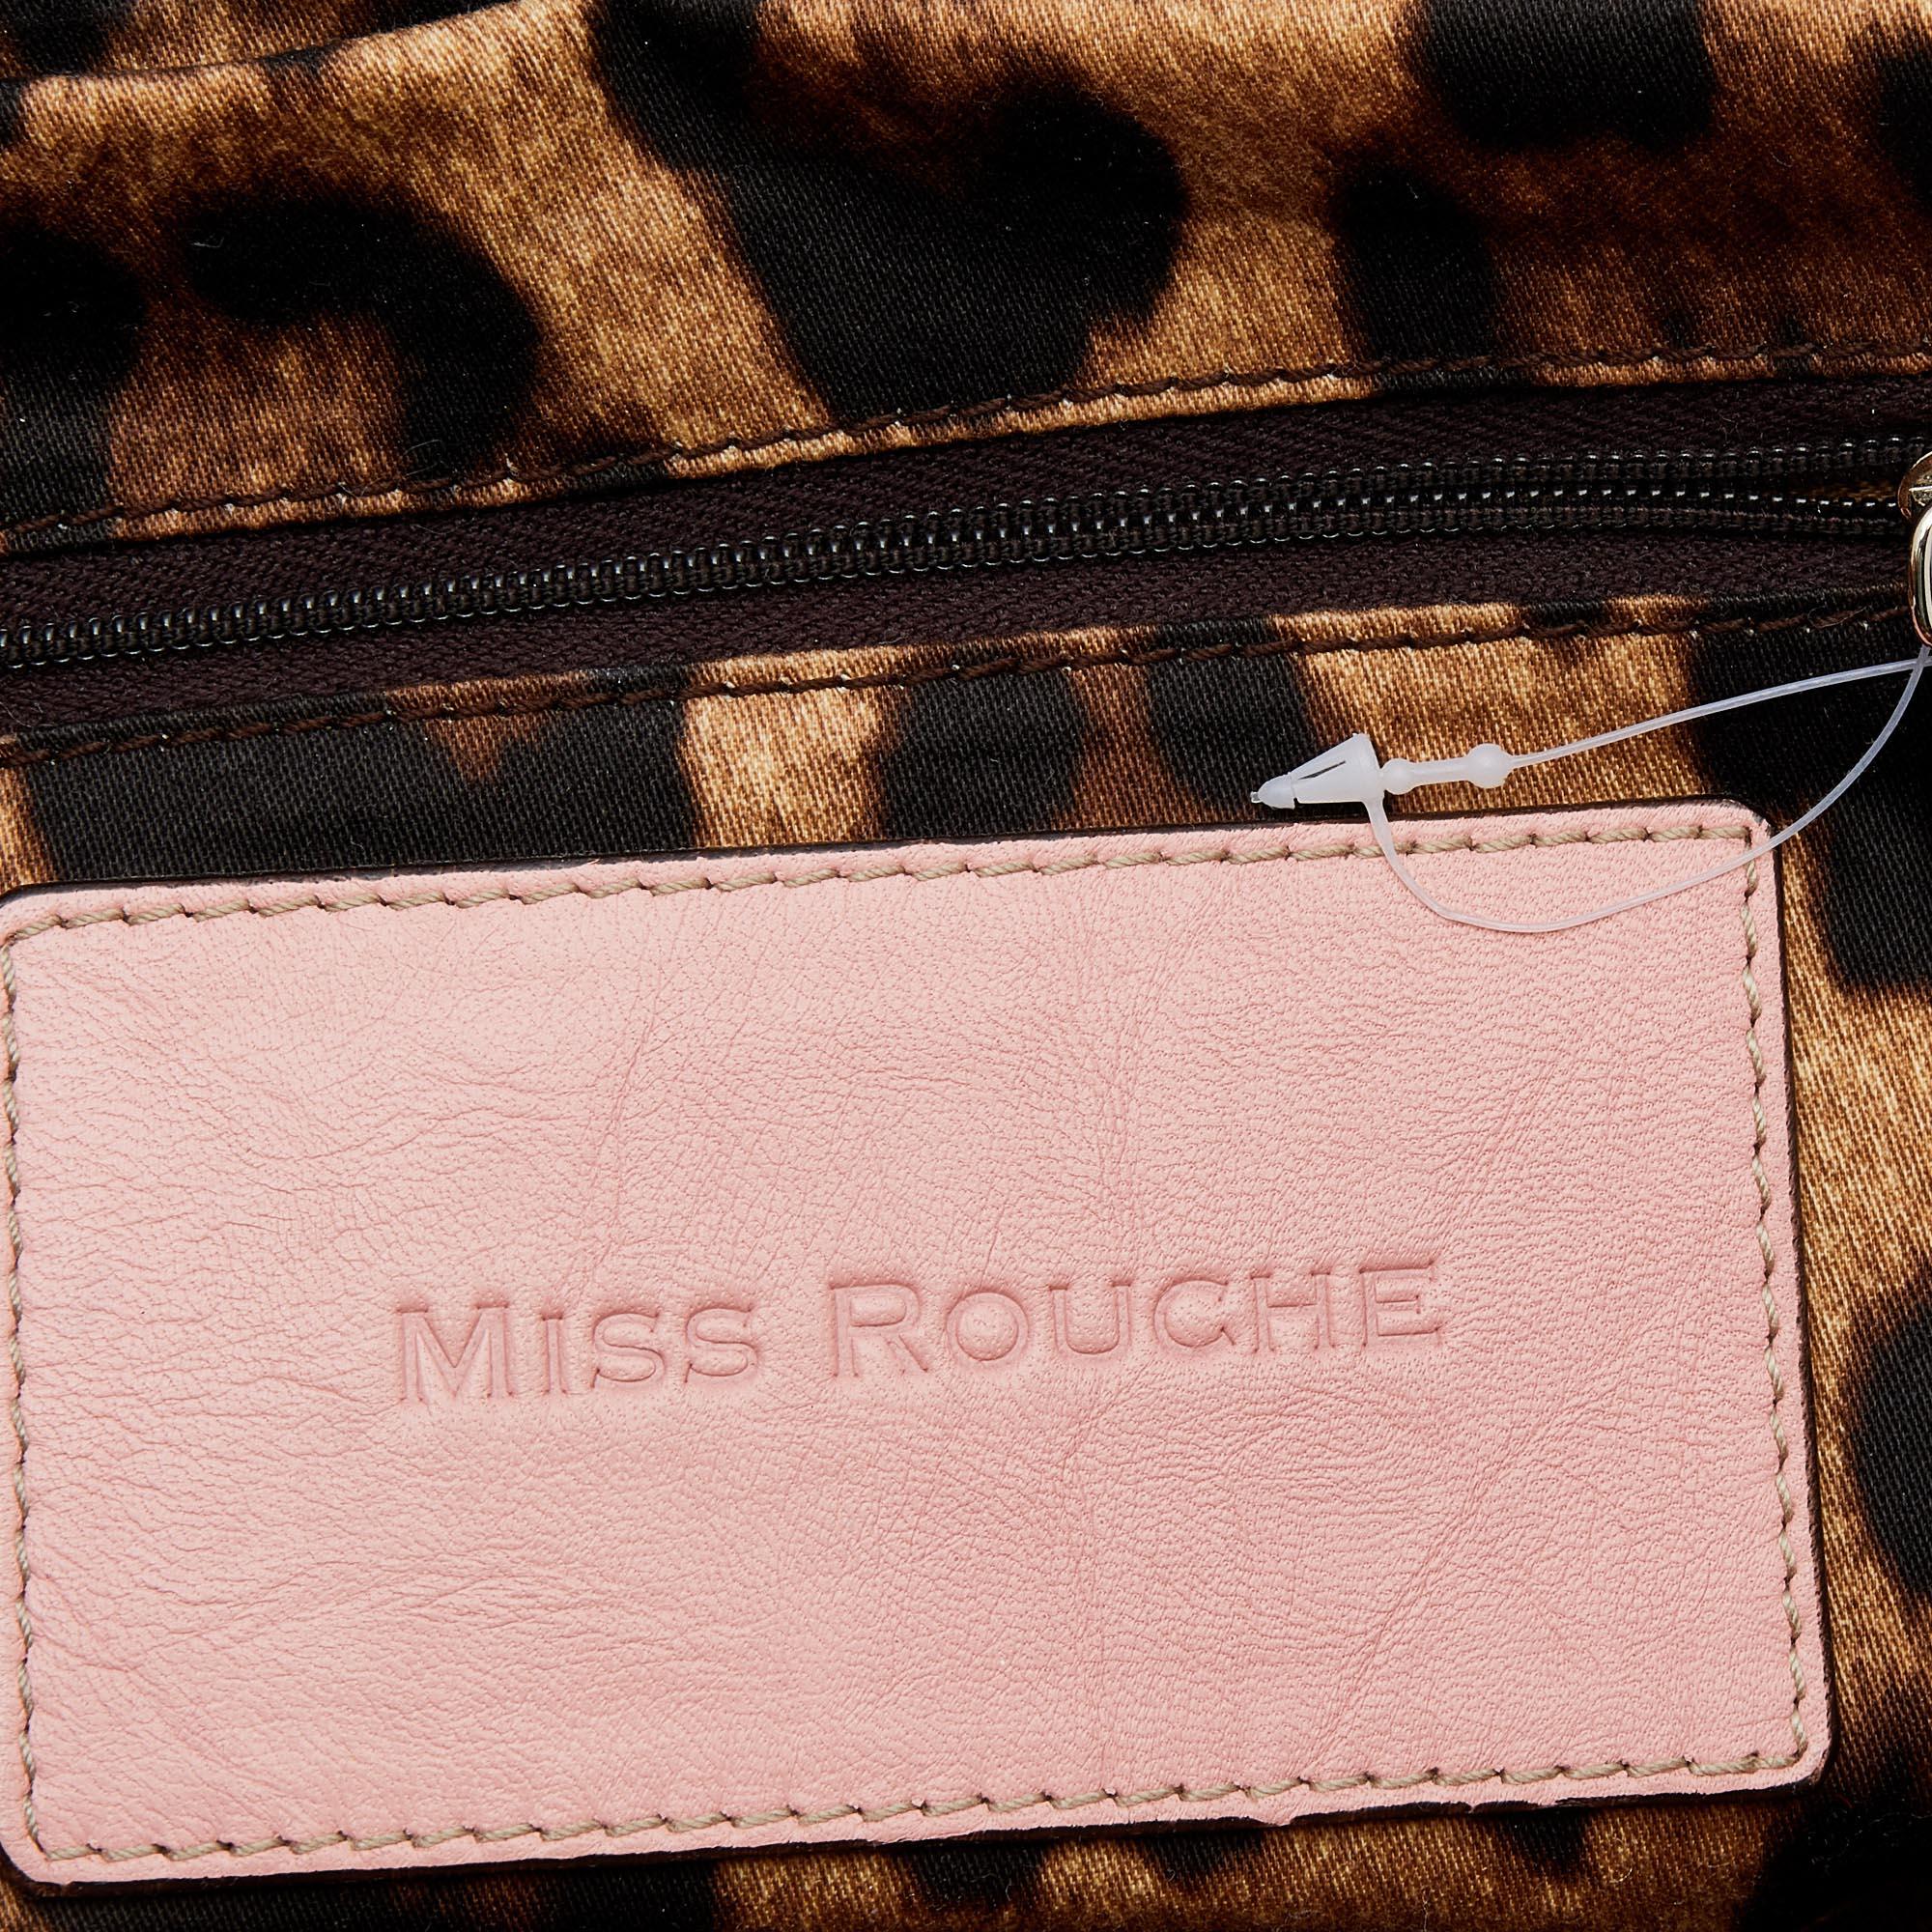 Dolce & Gabbana Pink Leather Miss Rouche Satchel 5